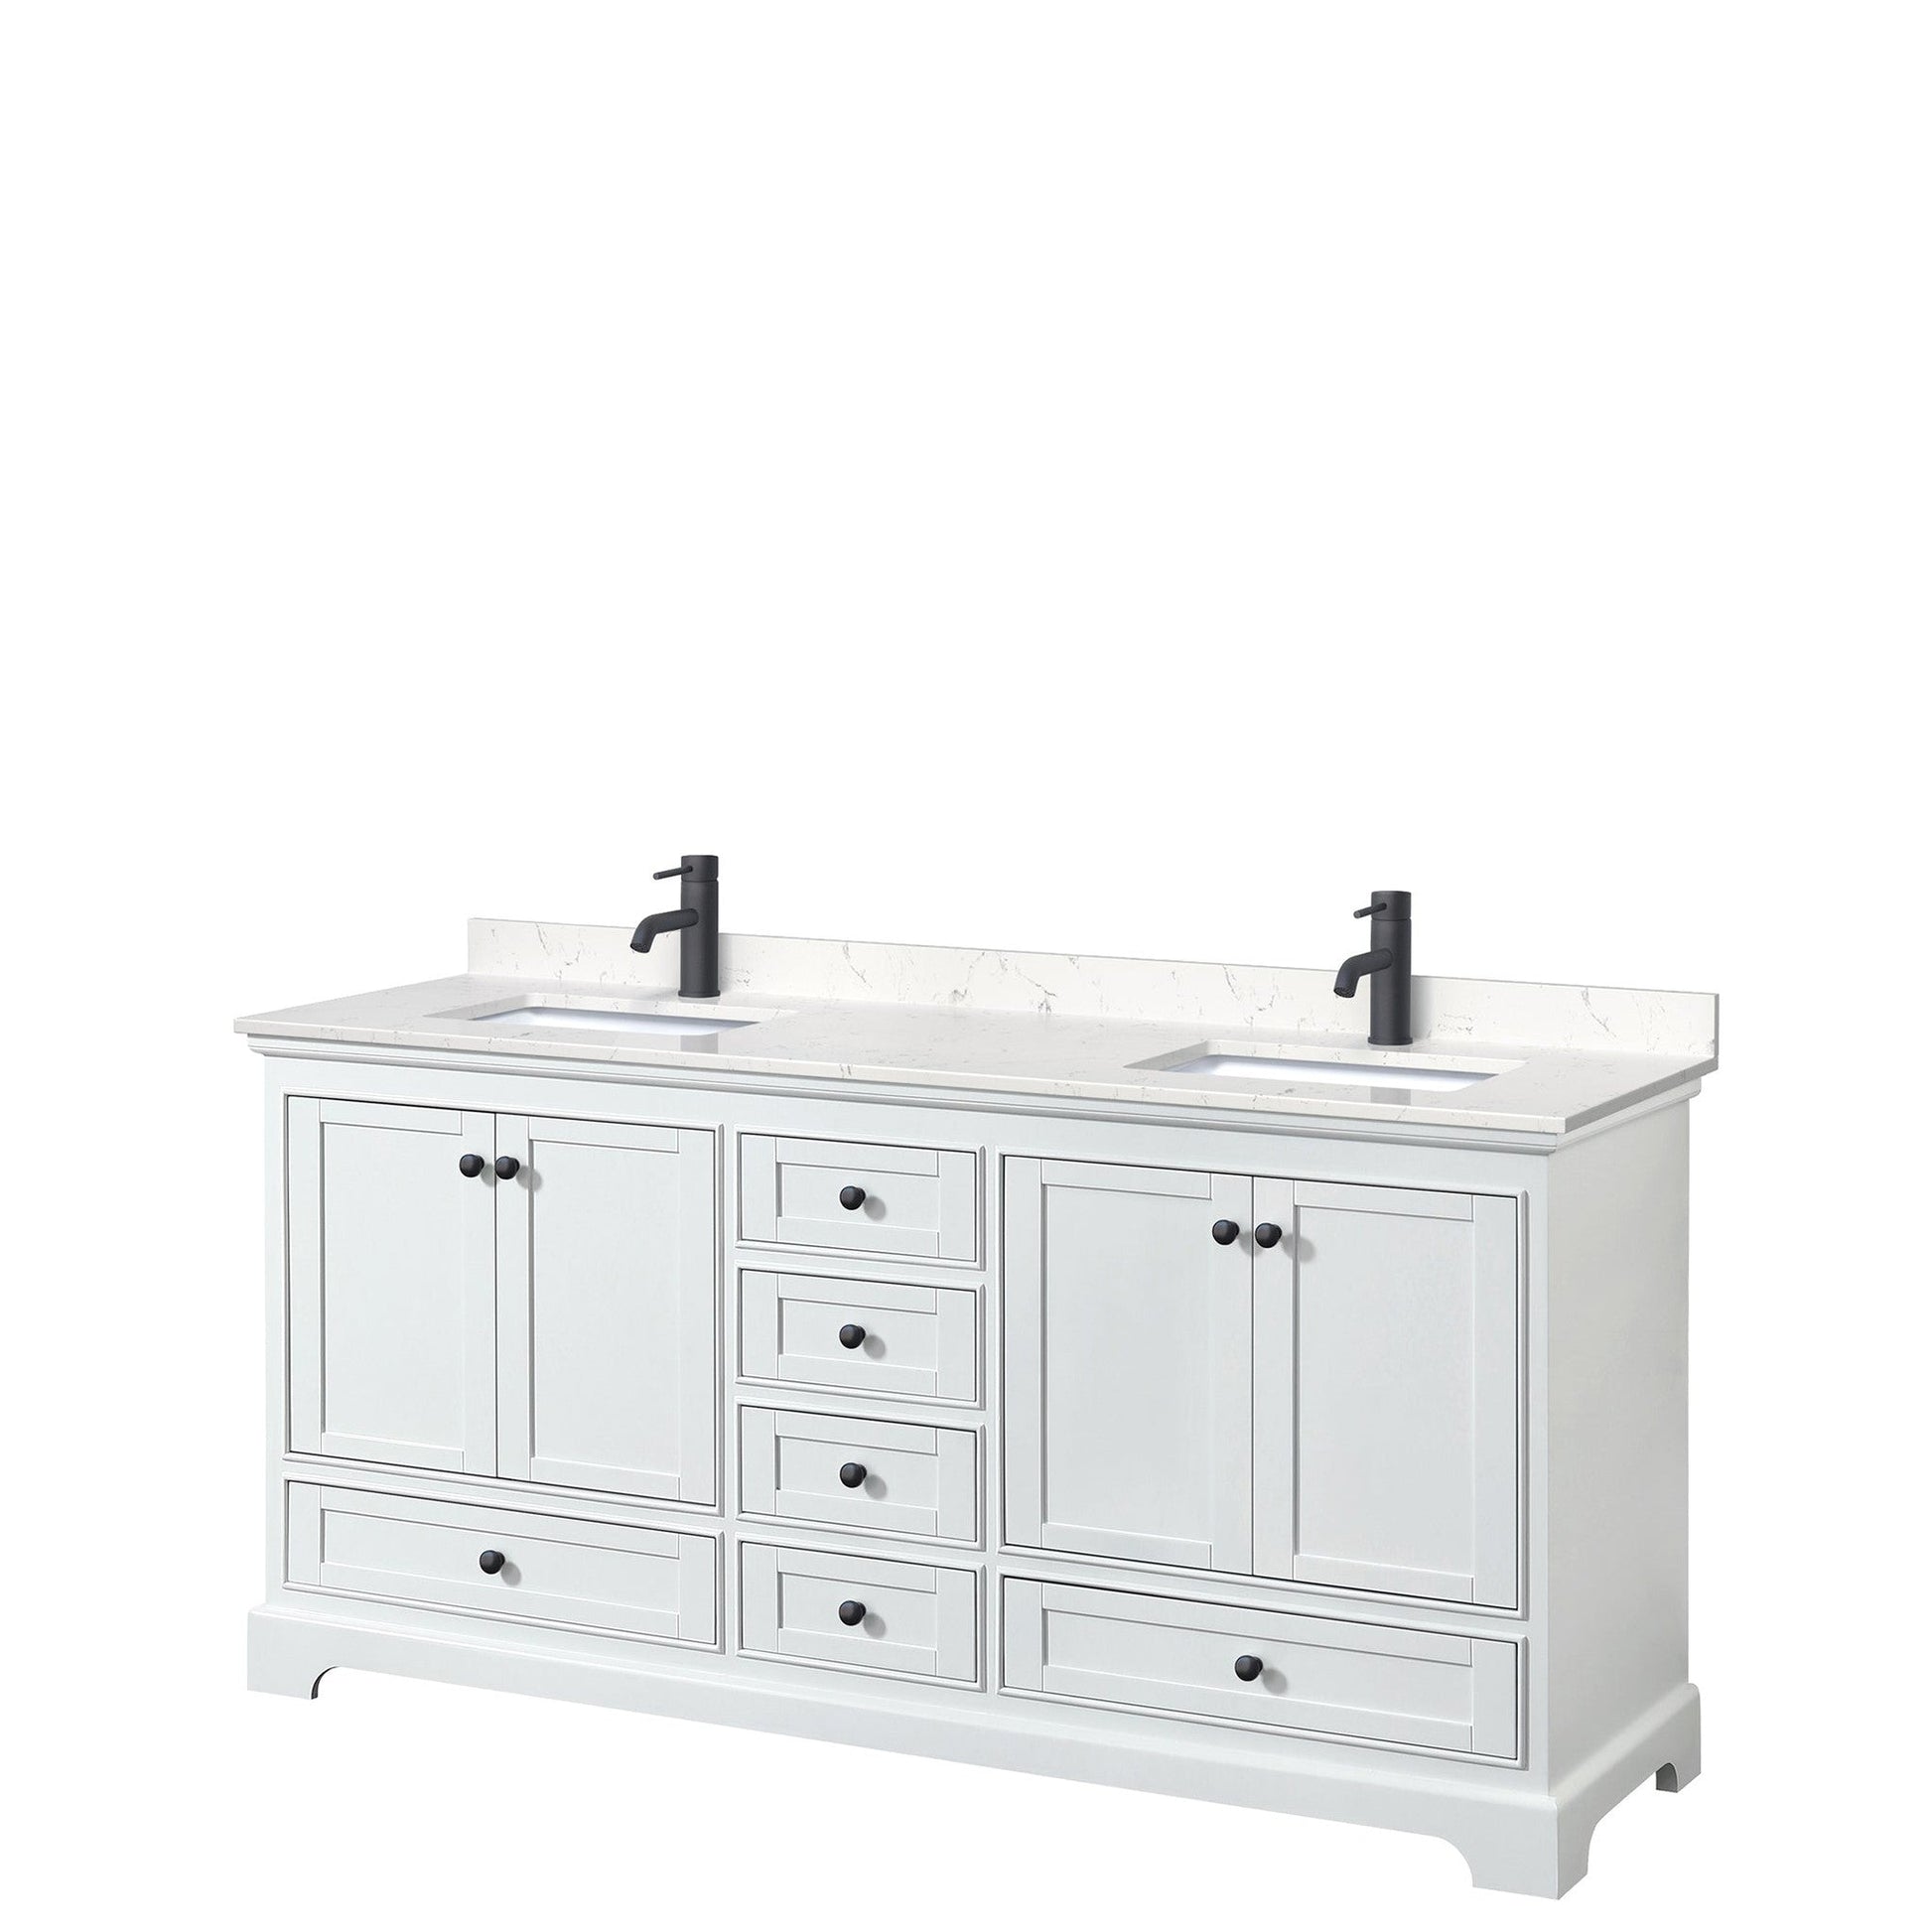 Deborah 72" Double Bathroom Vanity in White, Carrara Cultured Marble Countertop, Undermount Square Sinks, Matte Black Trim